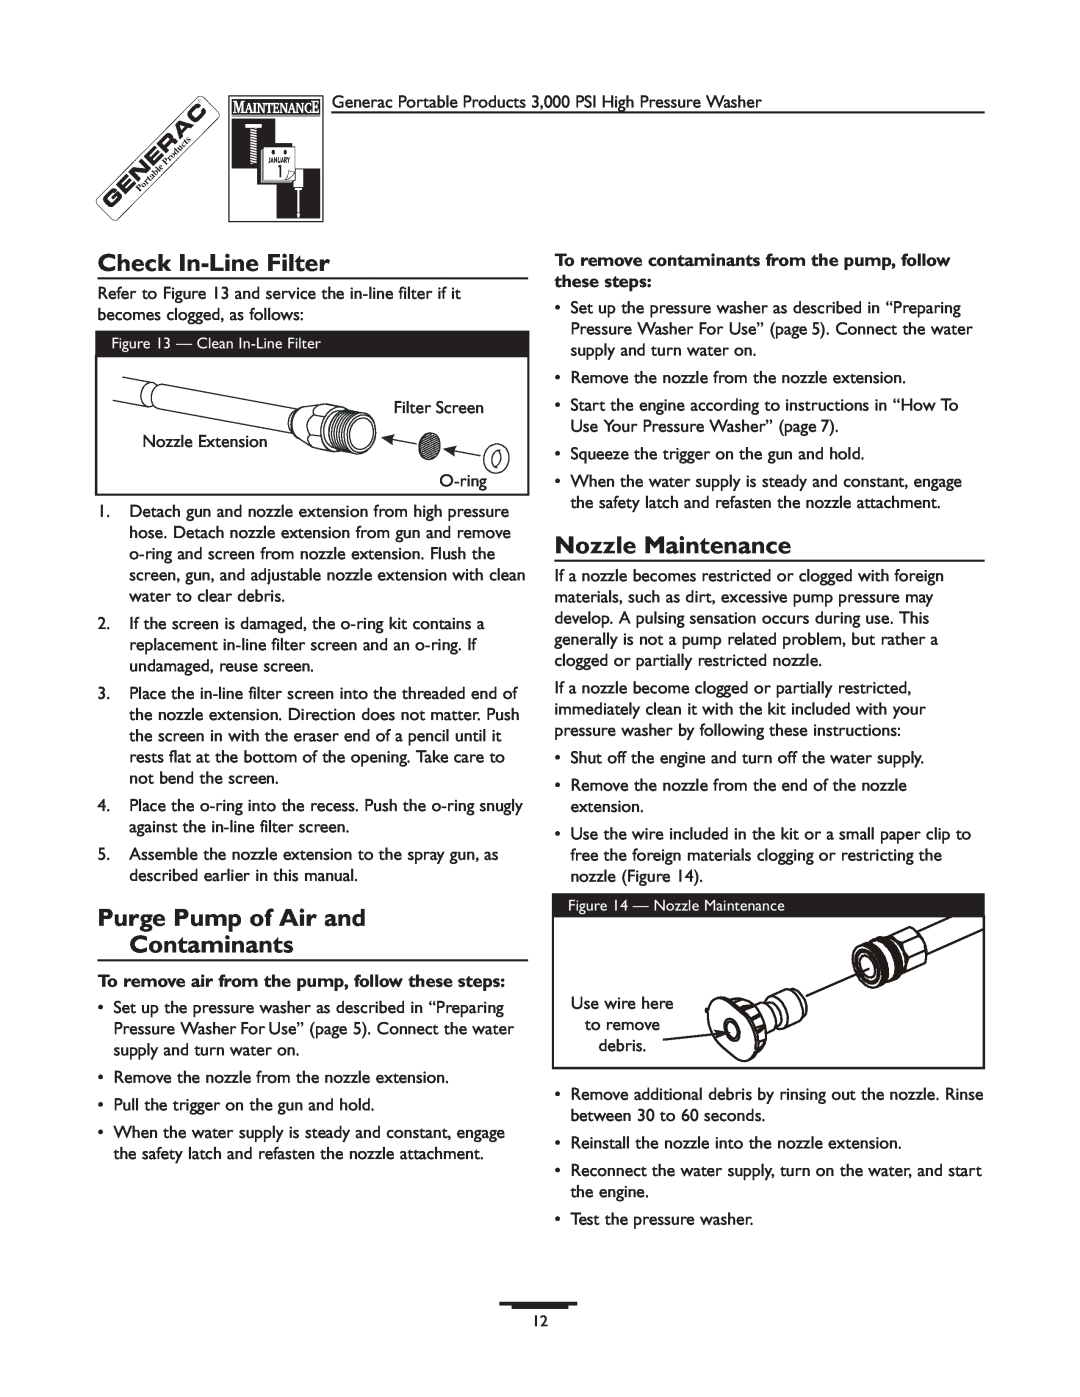 Generac 1418-0 manual Check In-Line Filter, Purge Pump of Air and Contaminants, Nozzle Maintenance 